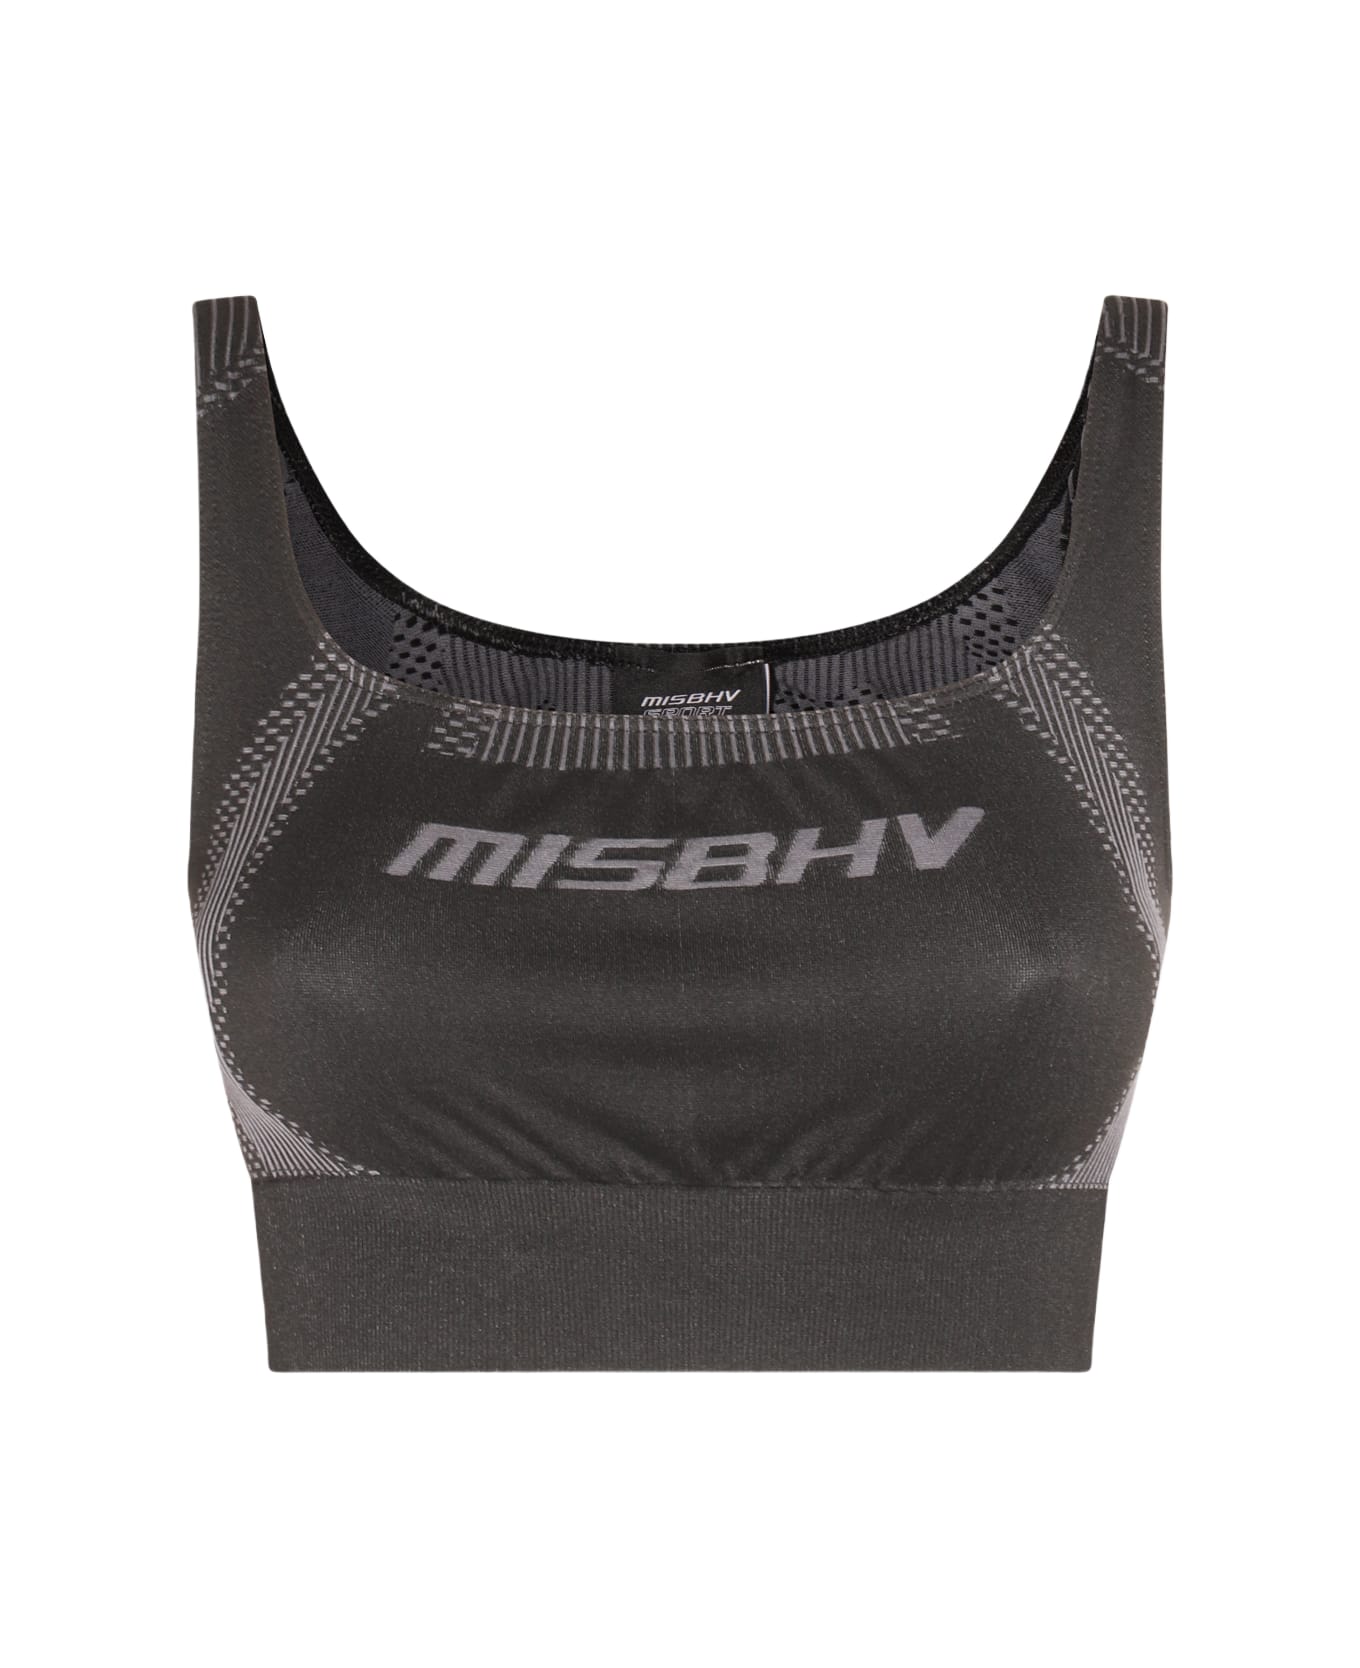 MISBHV Muted Black Stretch Sport Bra Top - MUTED BLACK